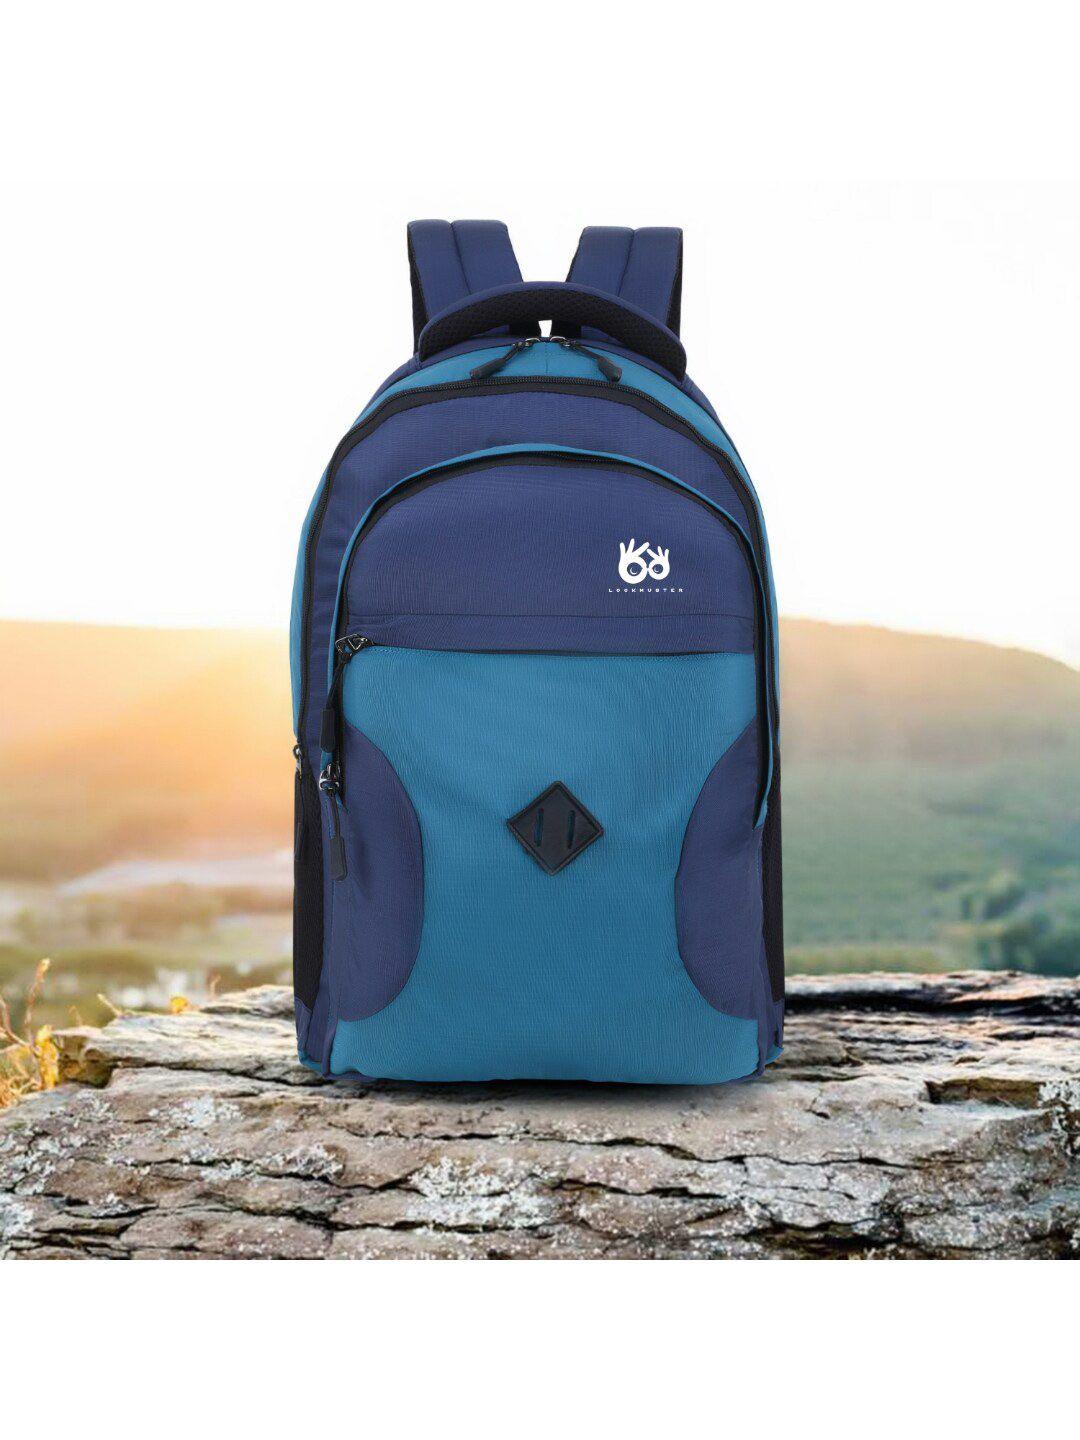 lookmuster unisex blue colourblocked backpack